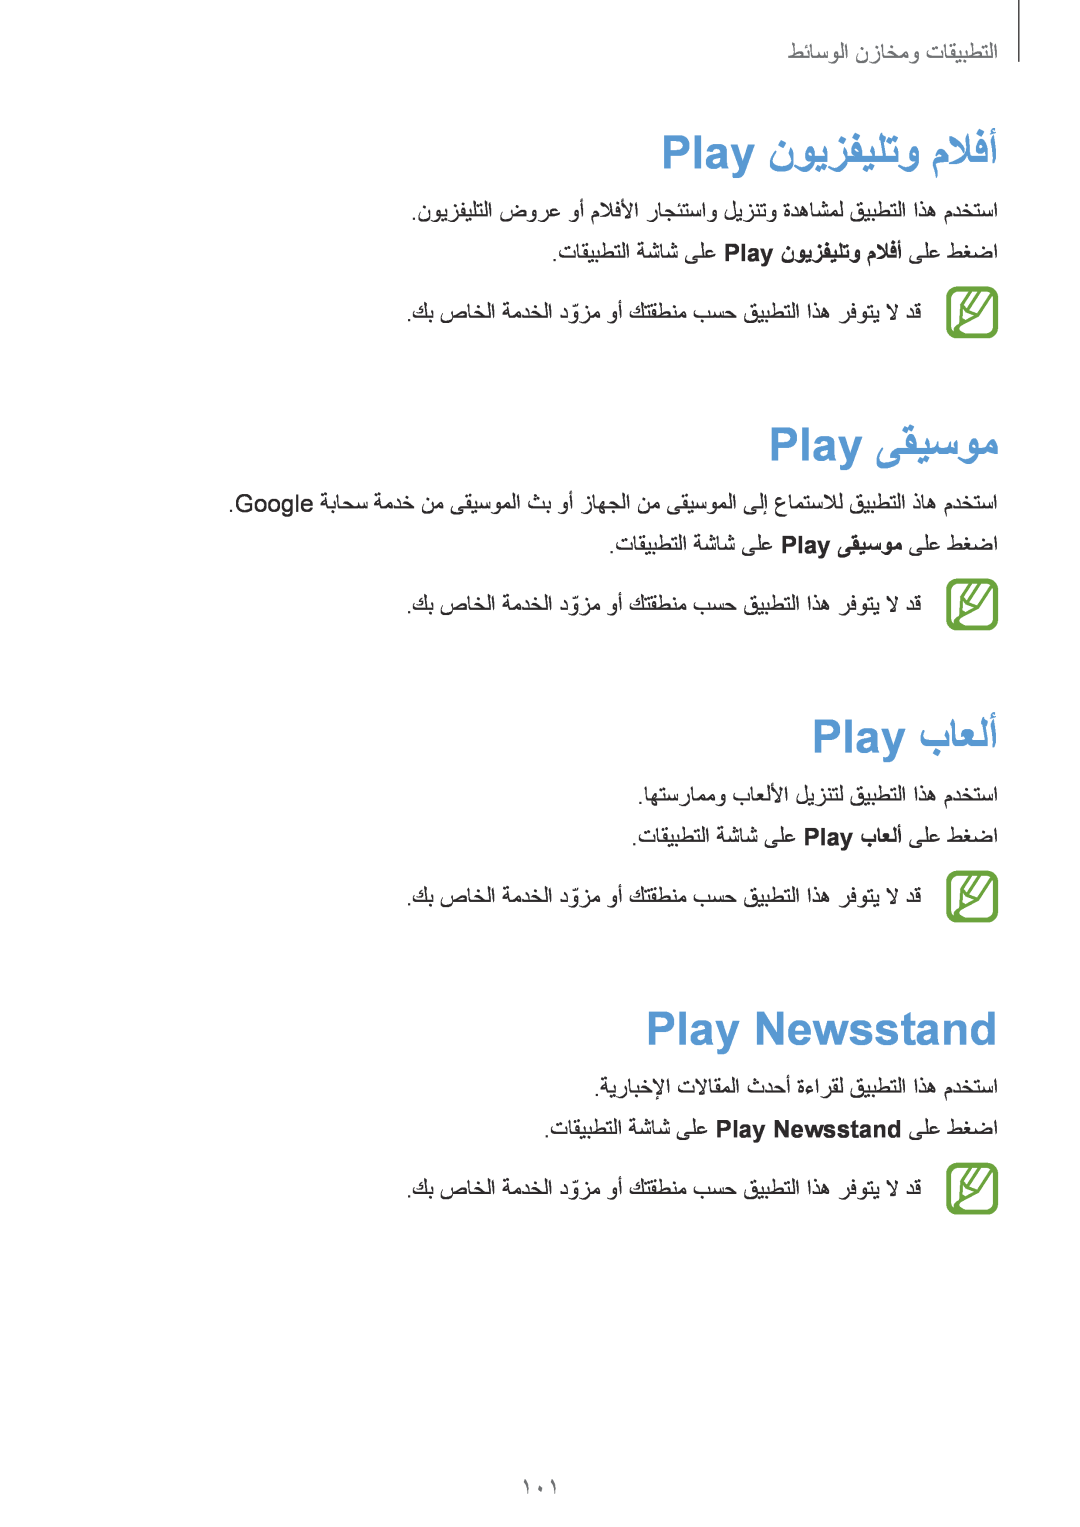 Samsung GT-I9515ZIAKSA, GT-I9515DKYXSG Play نويزفيلتو ملافأ, Play ىقيسوم, Play باعلأ, Play Newsstand, التطٜ䨆䈆⨀ 䠆䔆⸆䘀 䐆䠆 